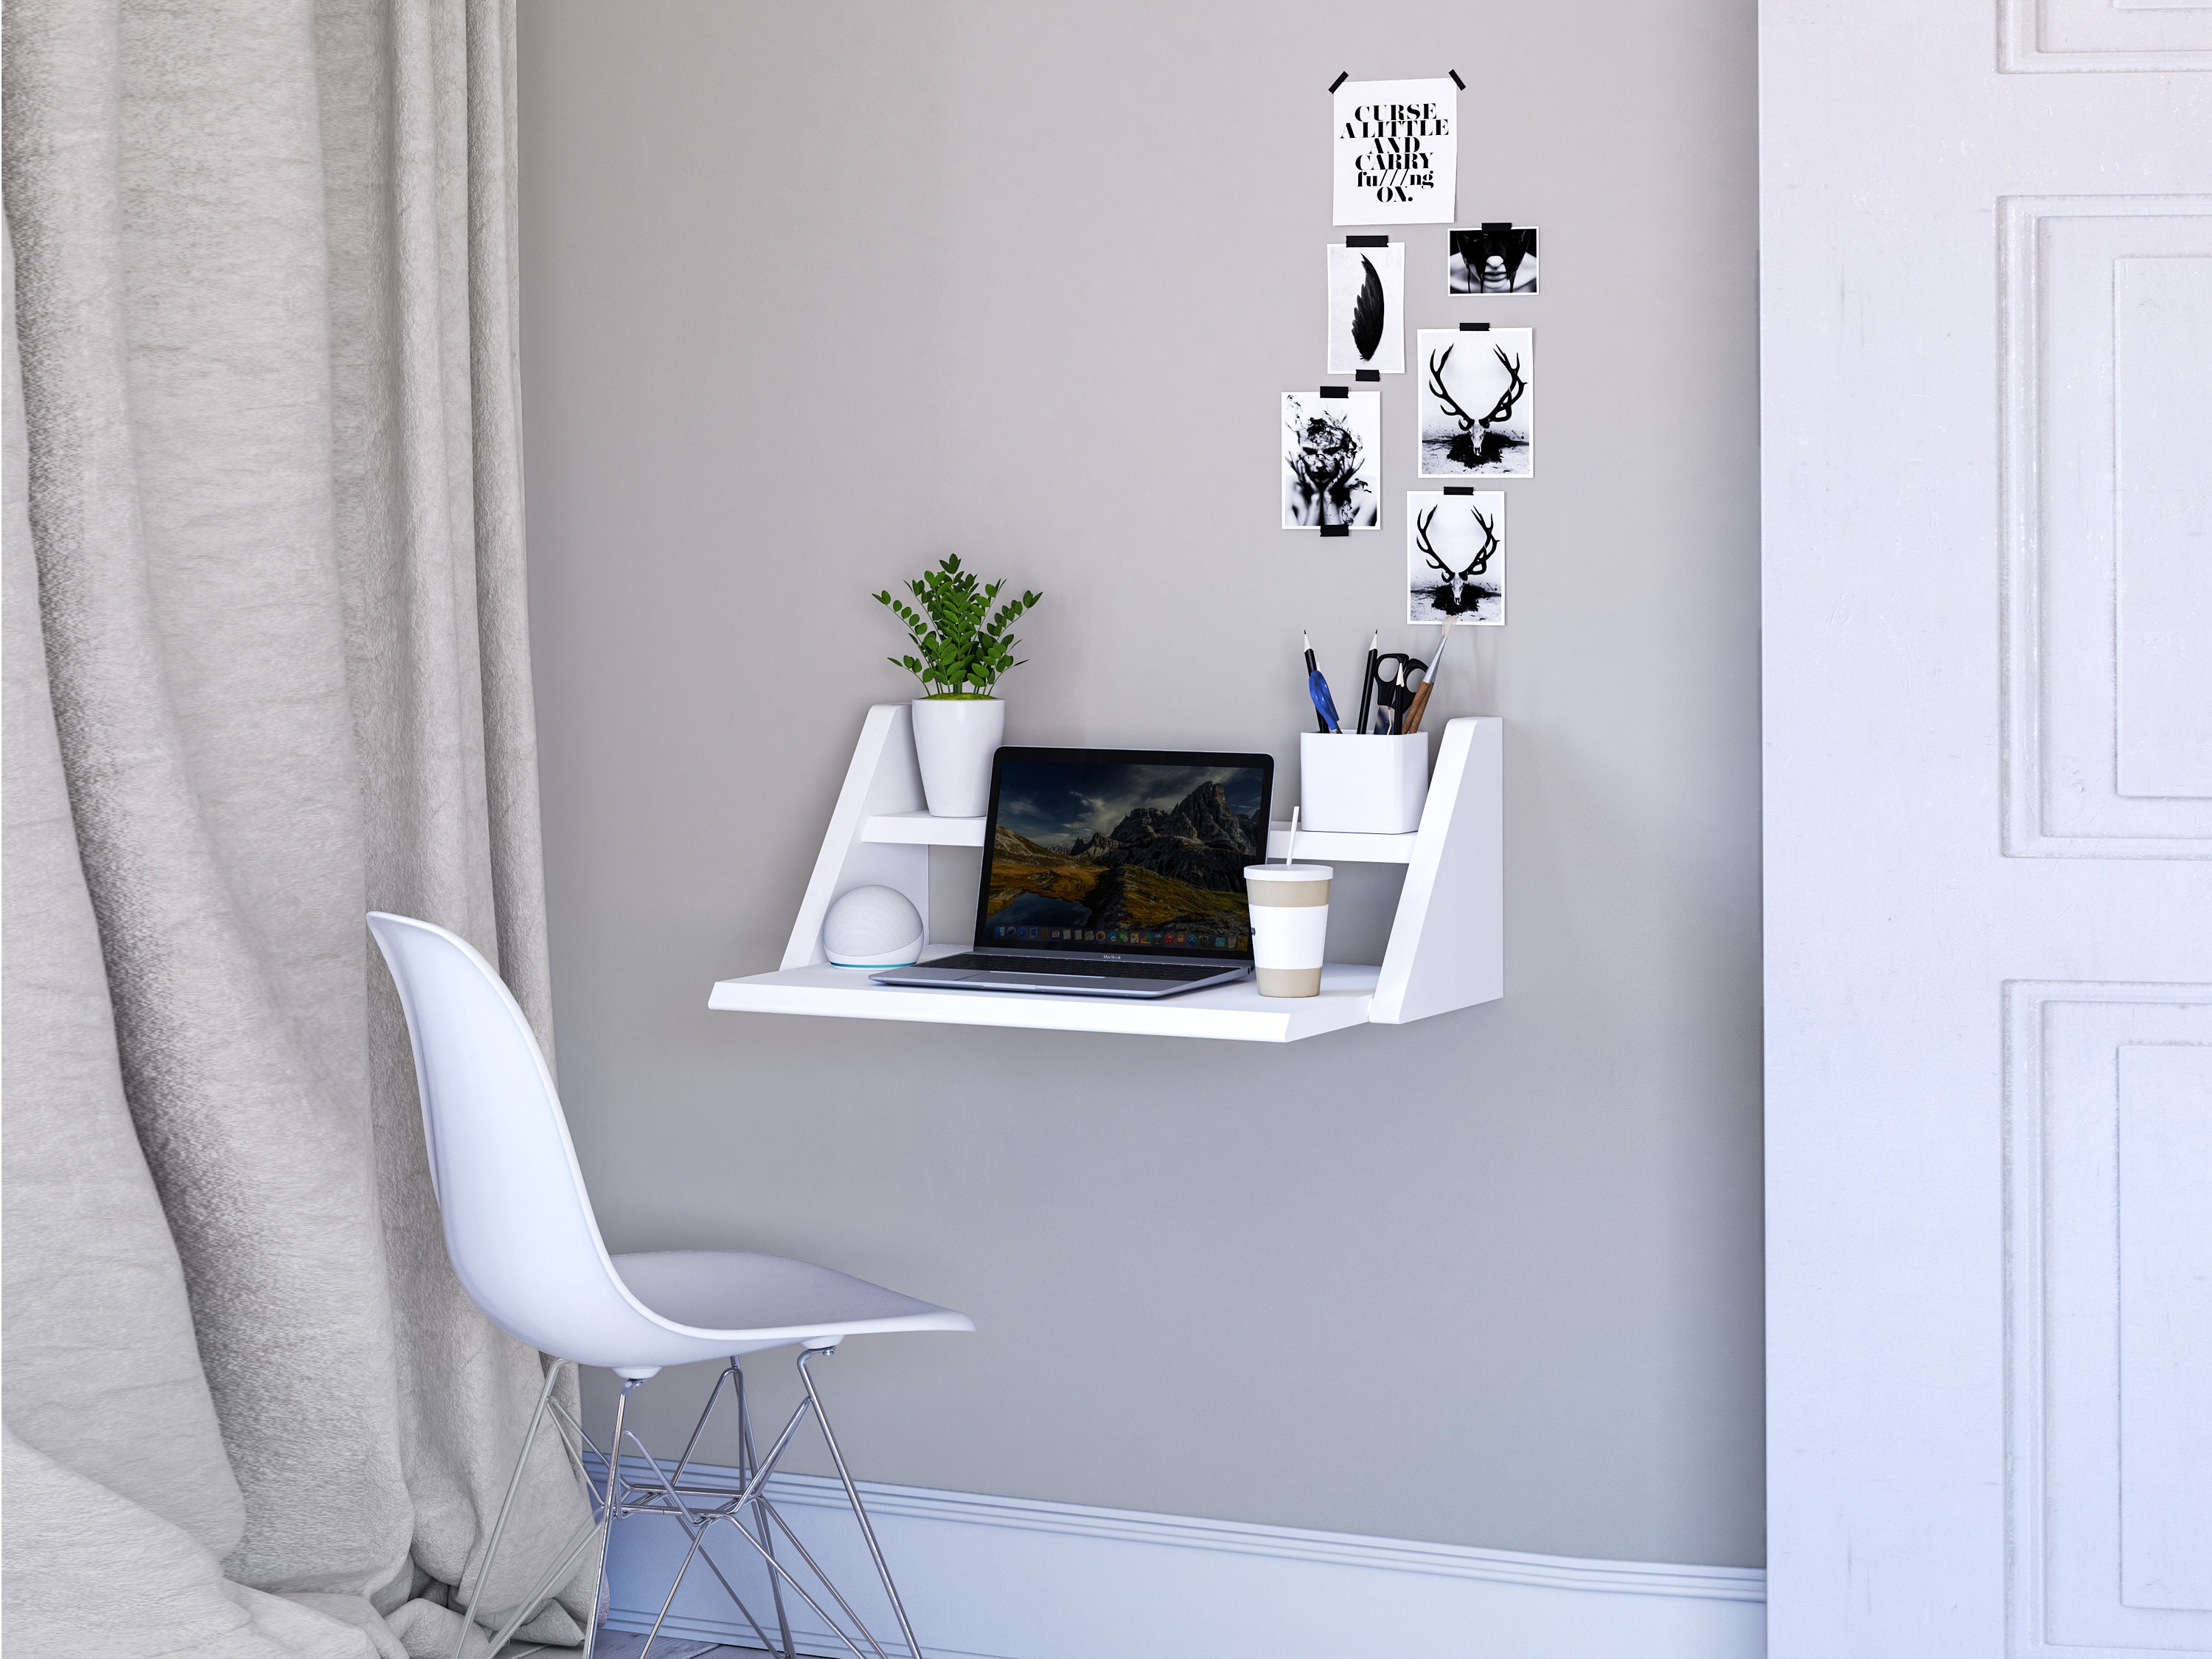 Fytz Design Small Floating Shelf Set of 2 - White Small Shelf for Wall with No Drill Shelf Option [ Adhesive Shelf ]